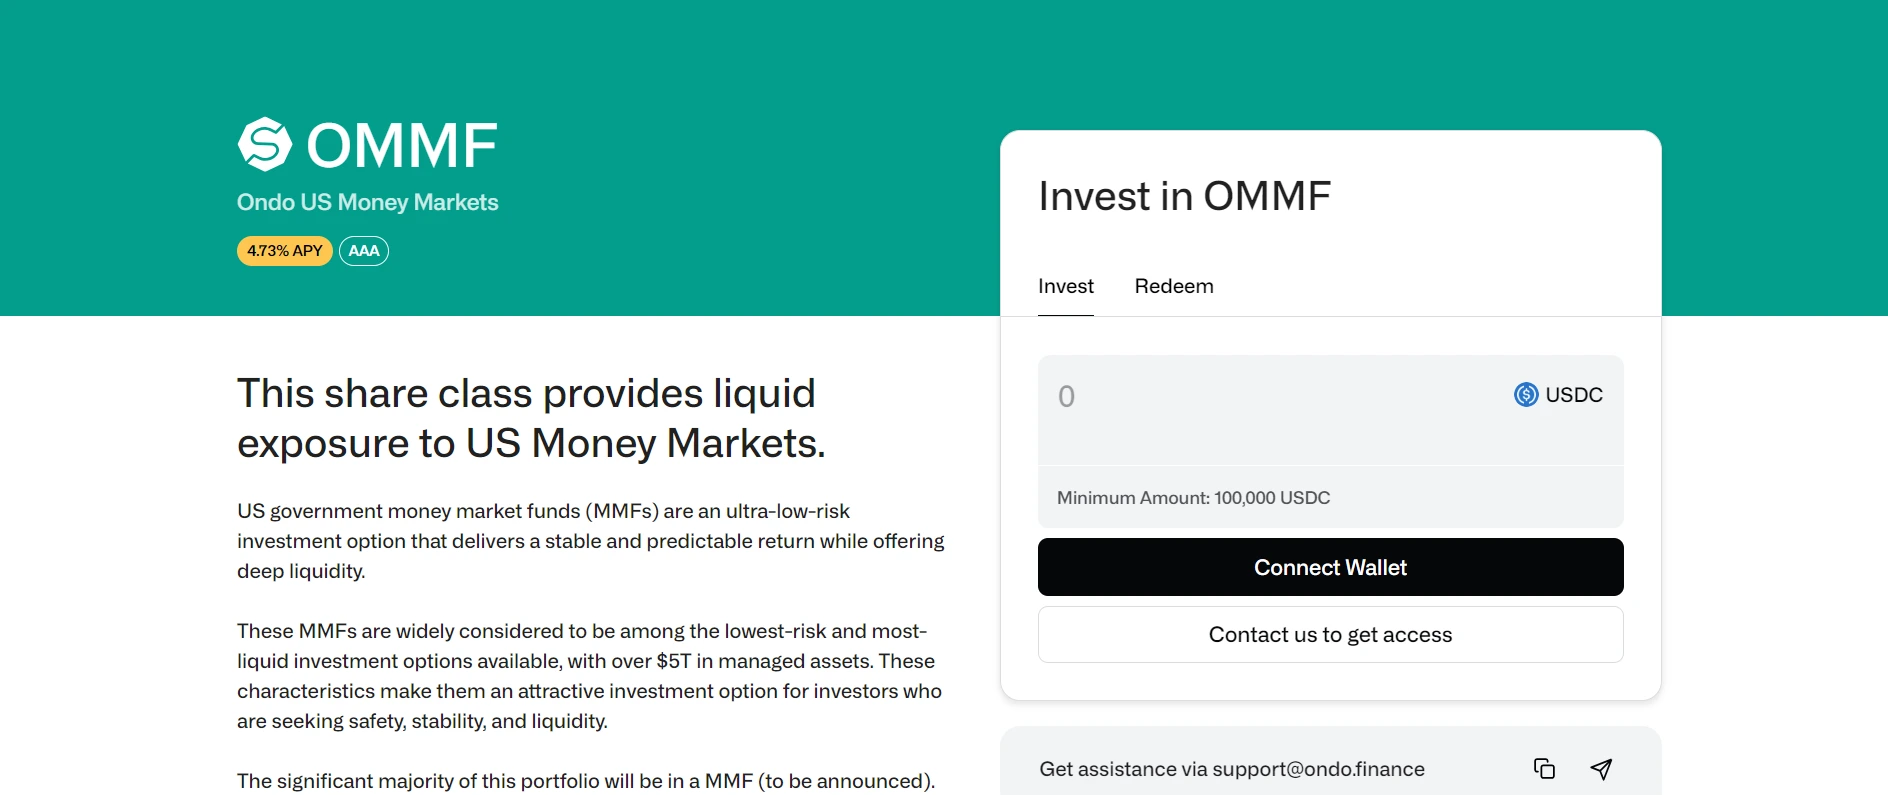 OMMF - Ondo US Money Markets